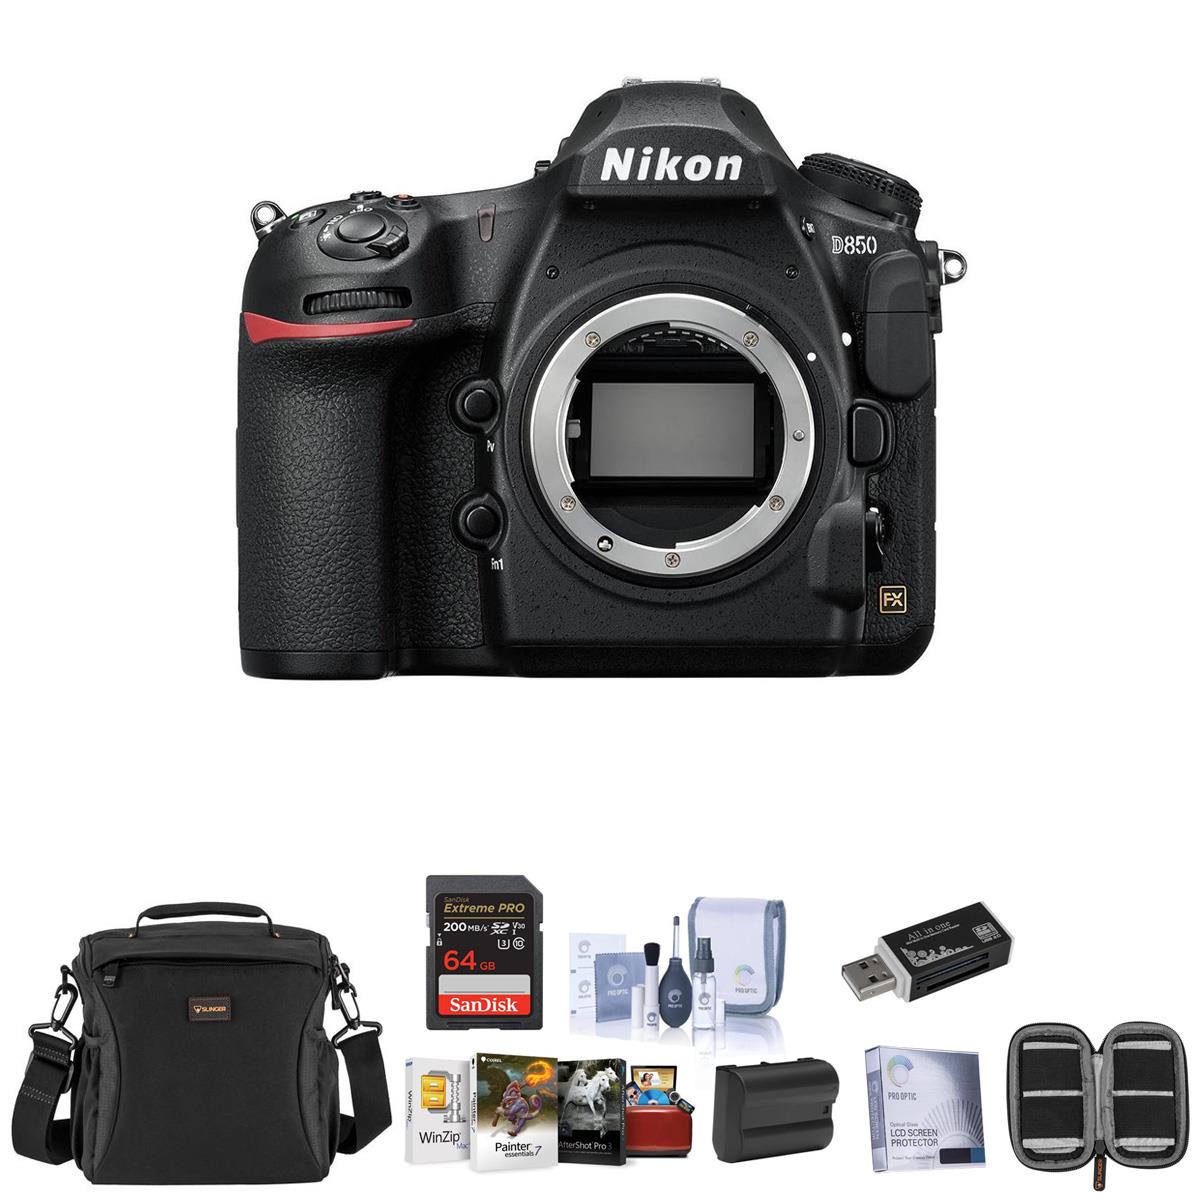 Nikon D850 DSLR Camera Body With Free Mac Accessory Bundle